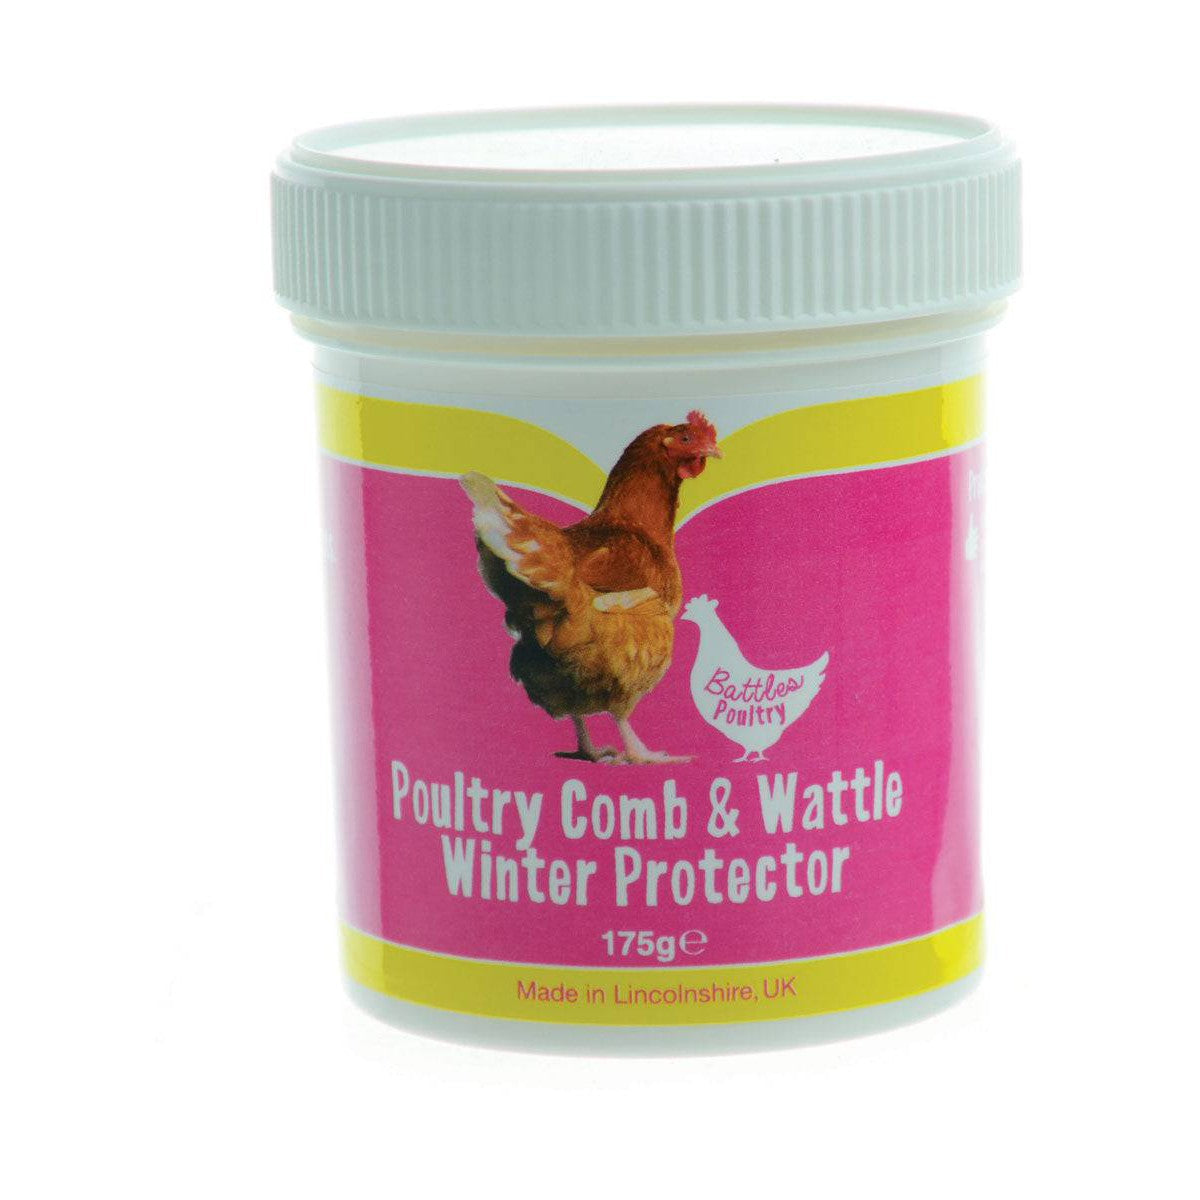 Battles Poultry Comb & Wattle Winter Protector Poultry Battles Barnstaple Equestrian Supplies